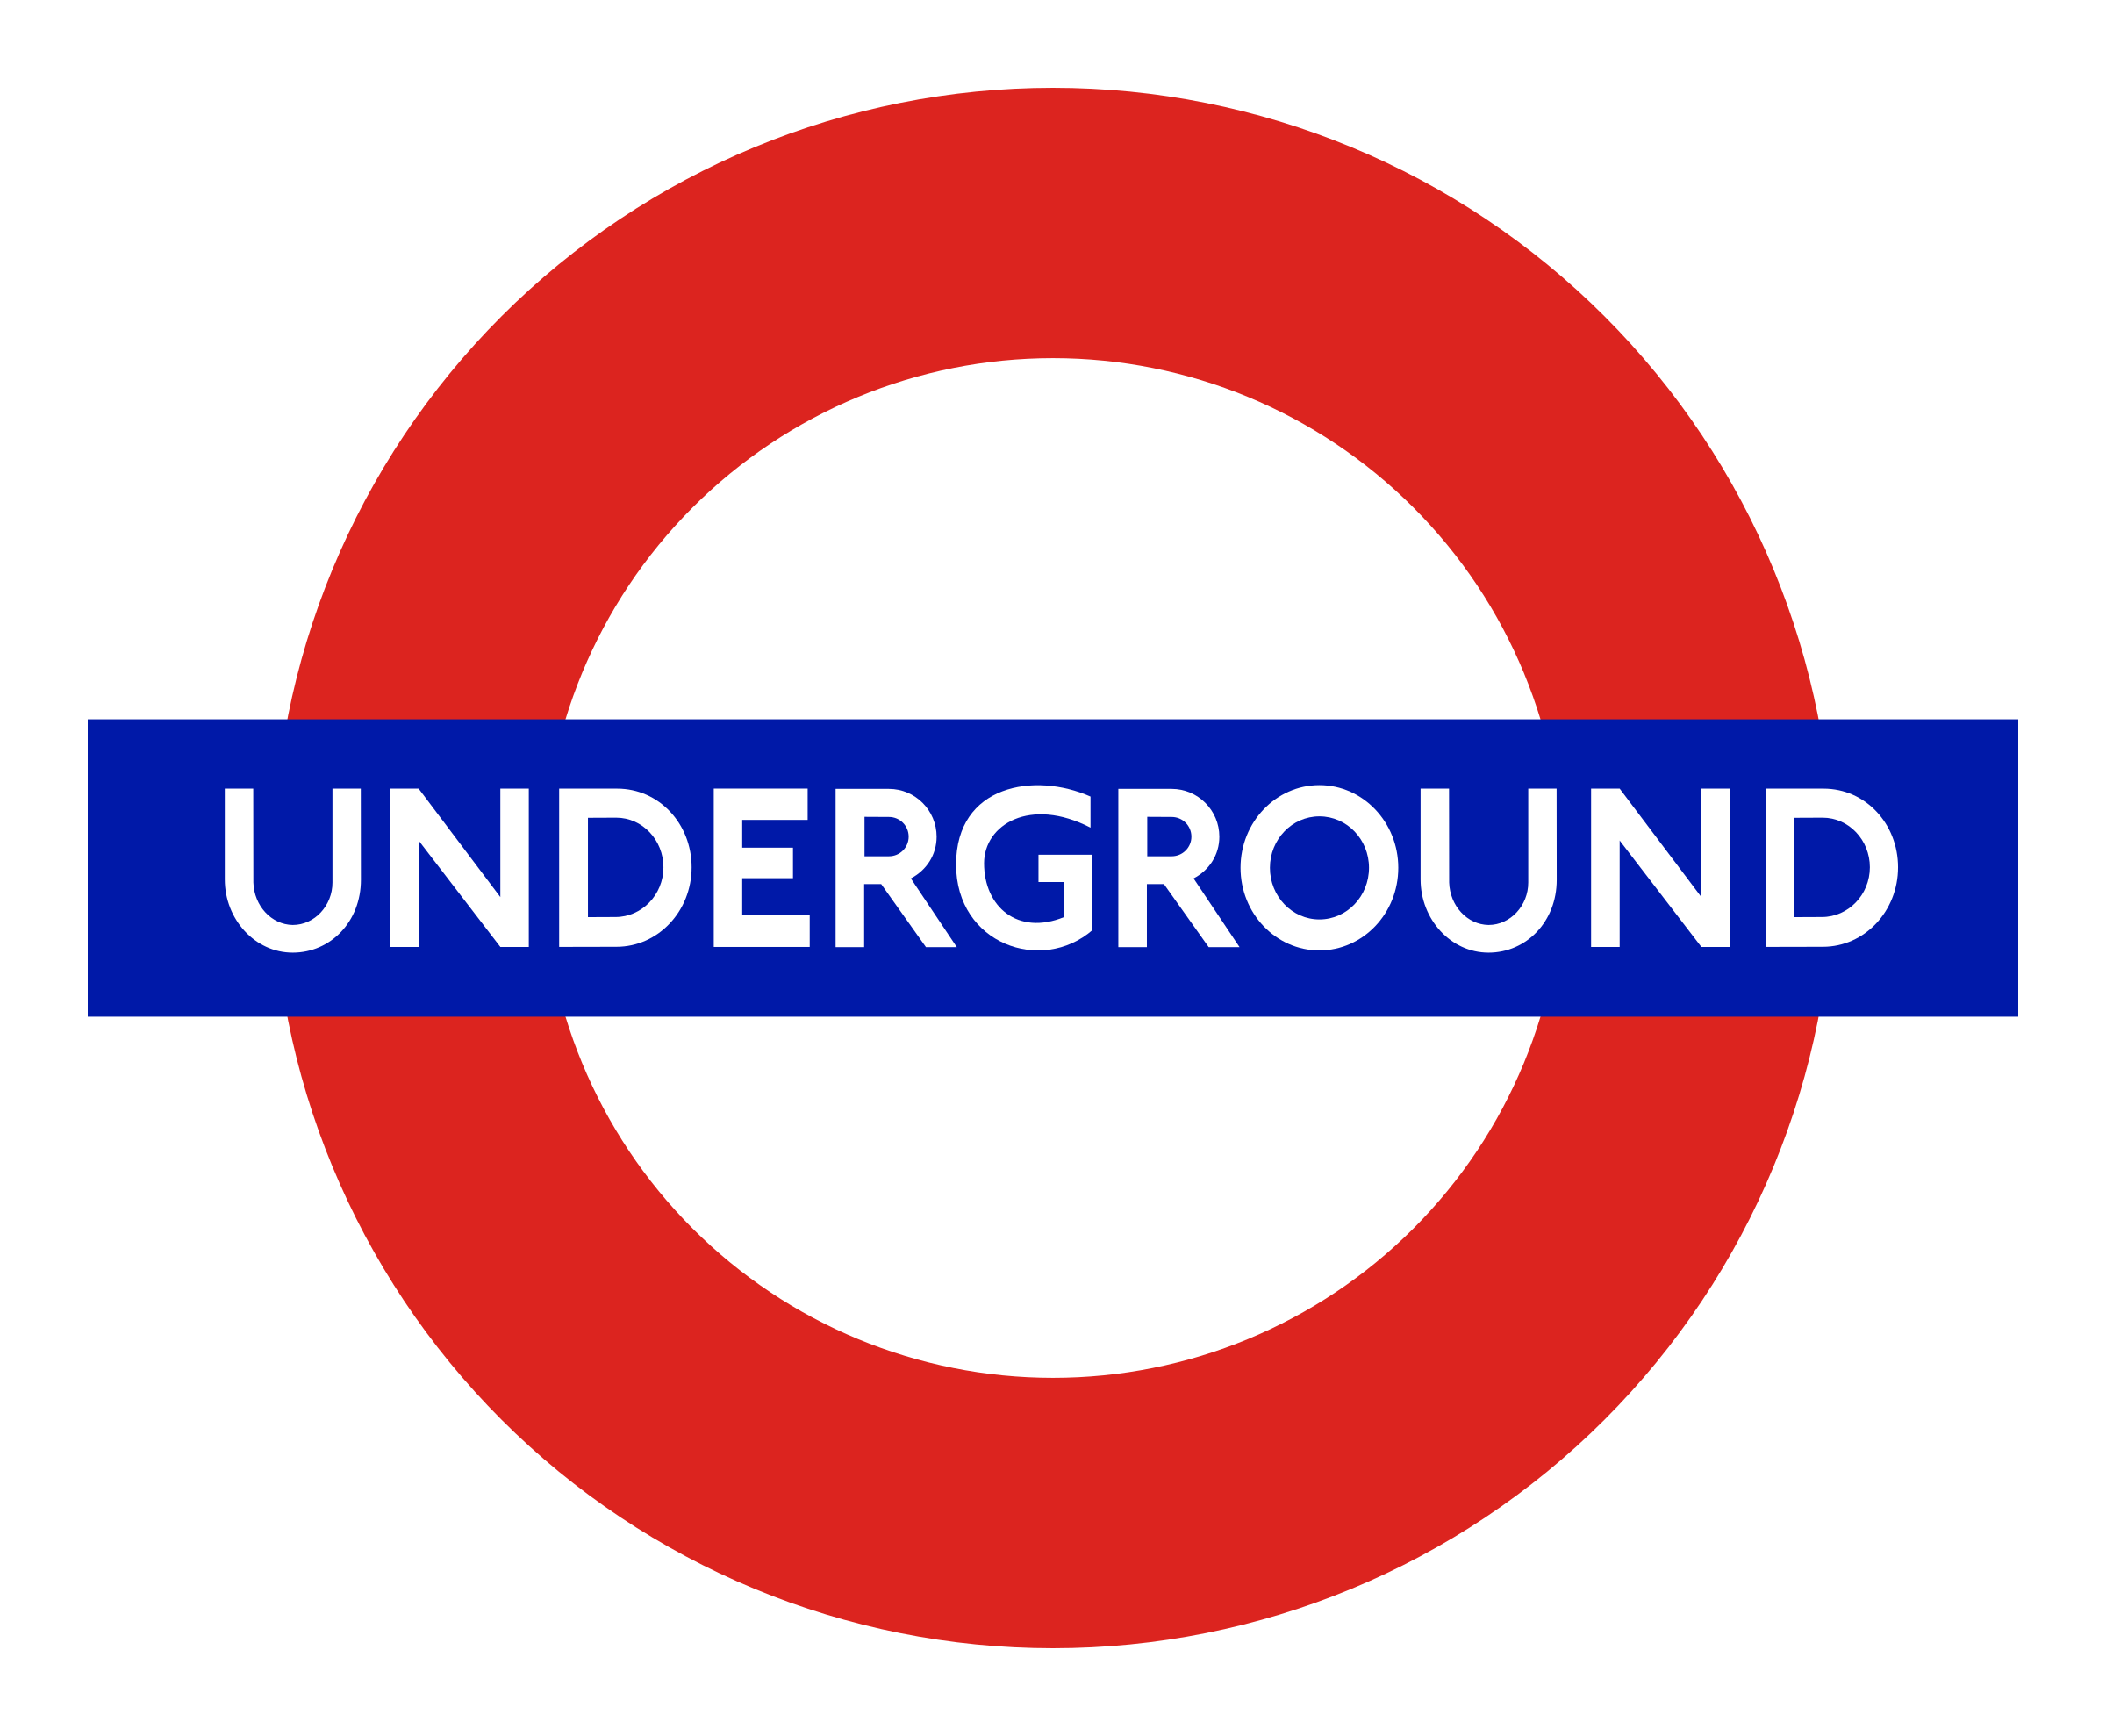 london-underground-logo-png-transparent.png